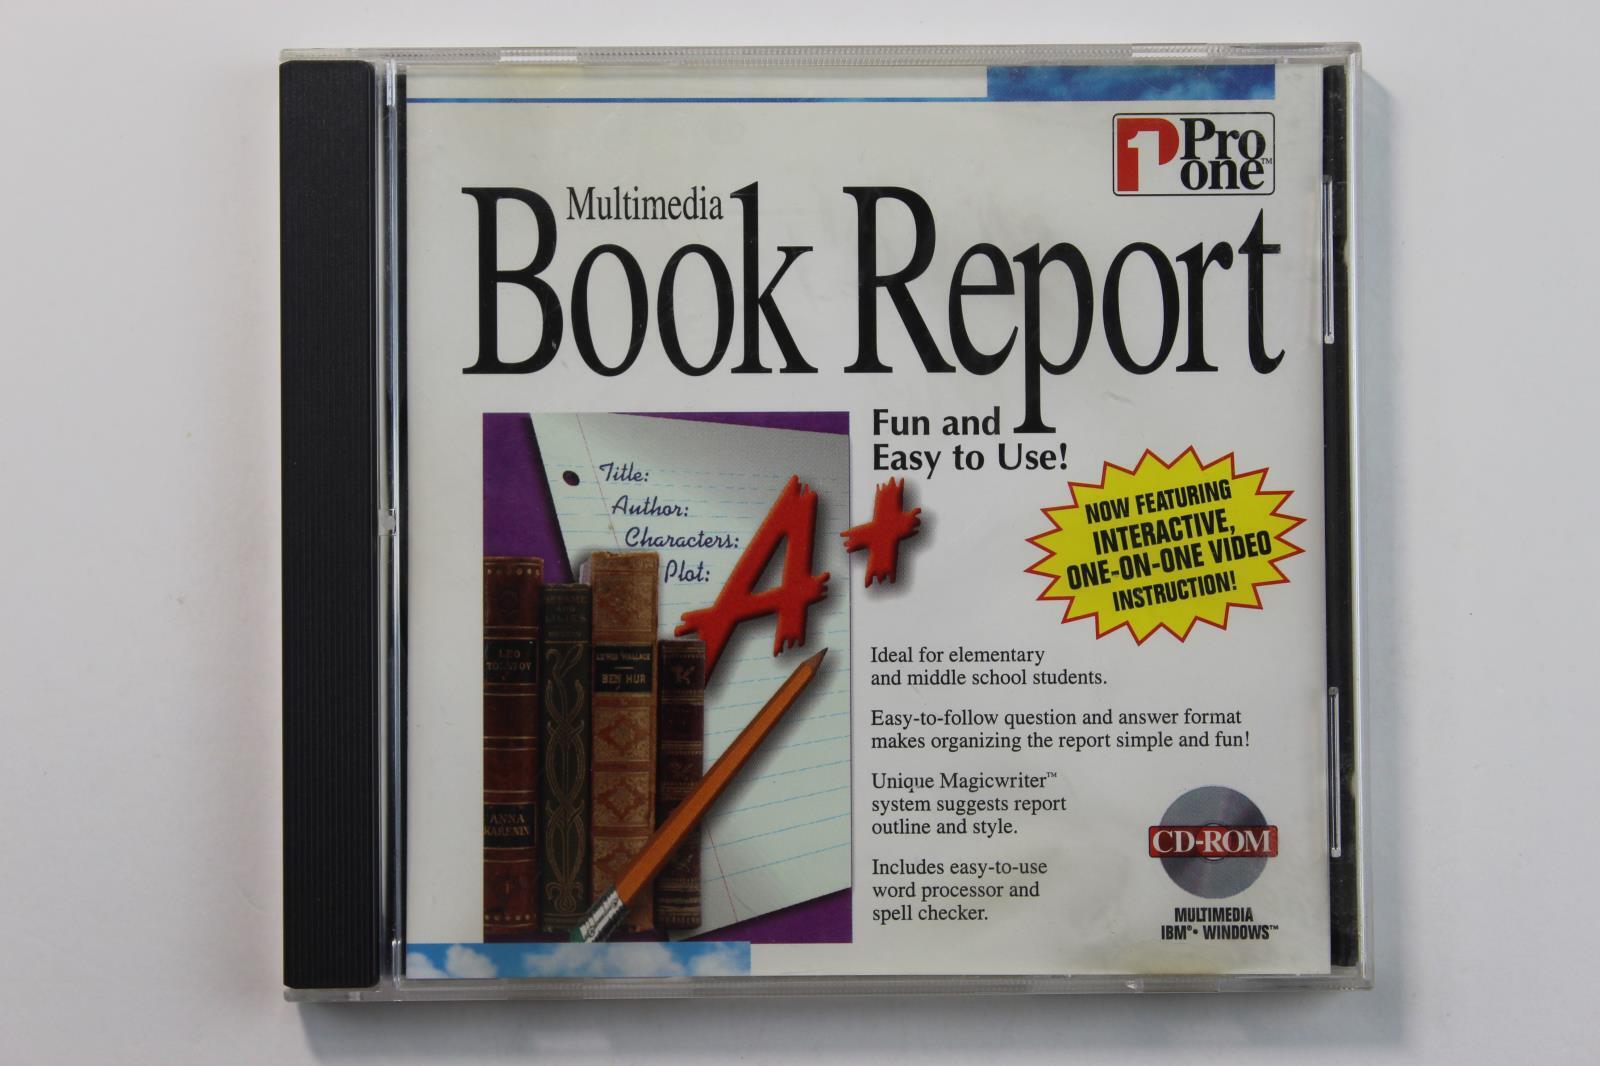 Multimedia Book Report Pro One Division Of IBM Windows 1995